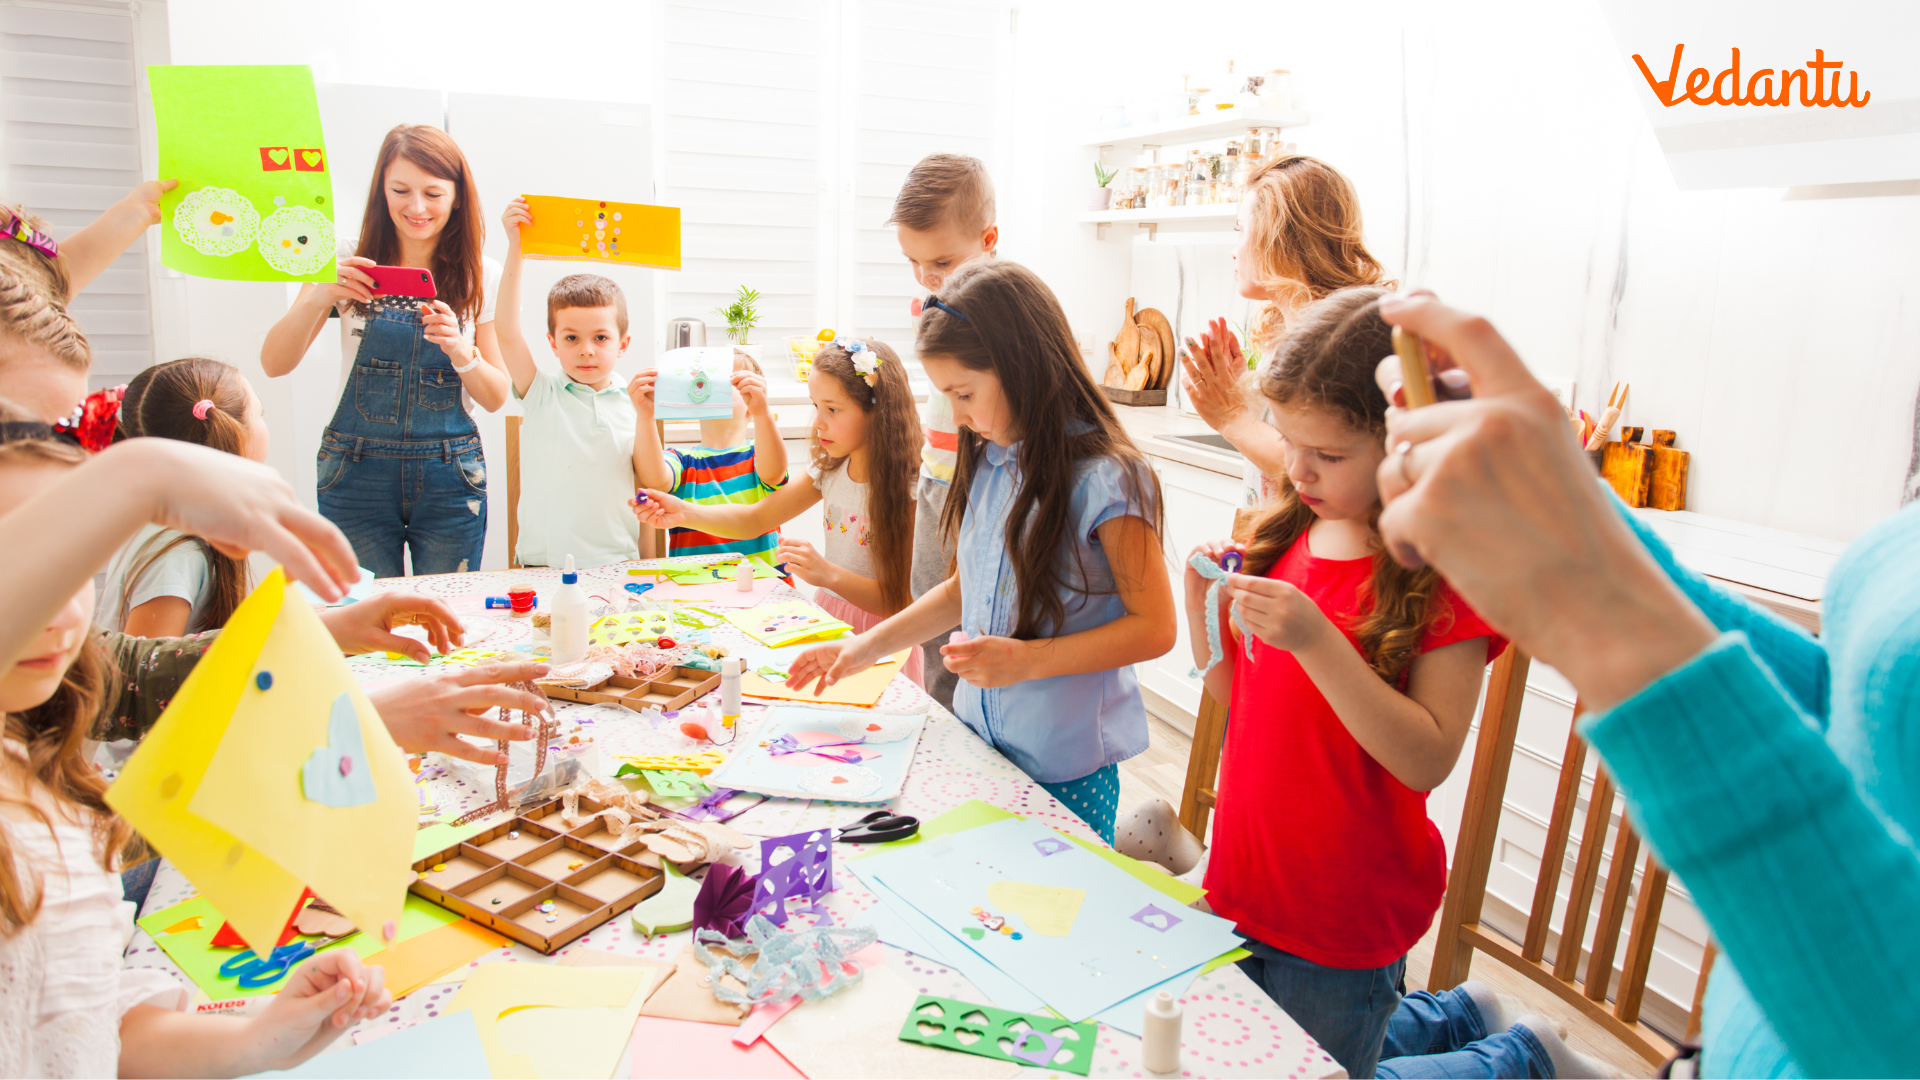 Kids' Summer Activities and Crafts Ideas